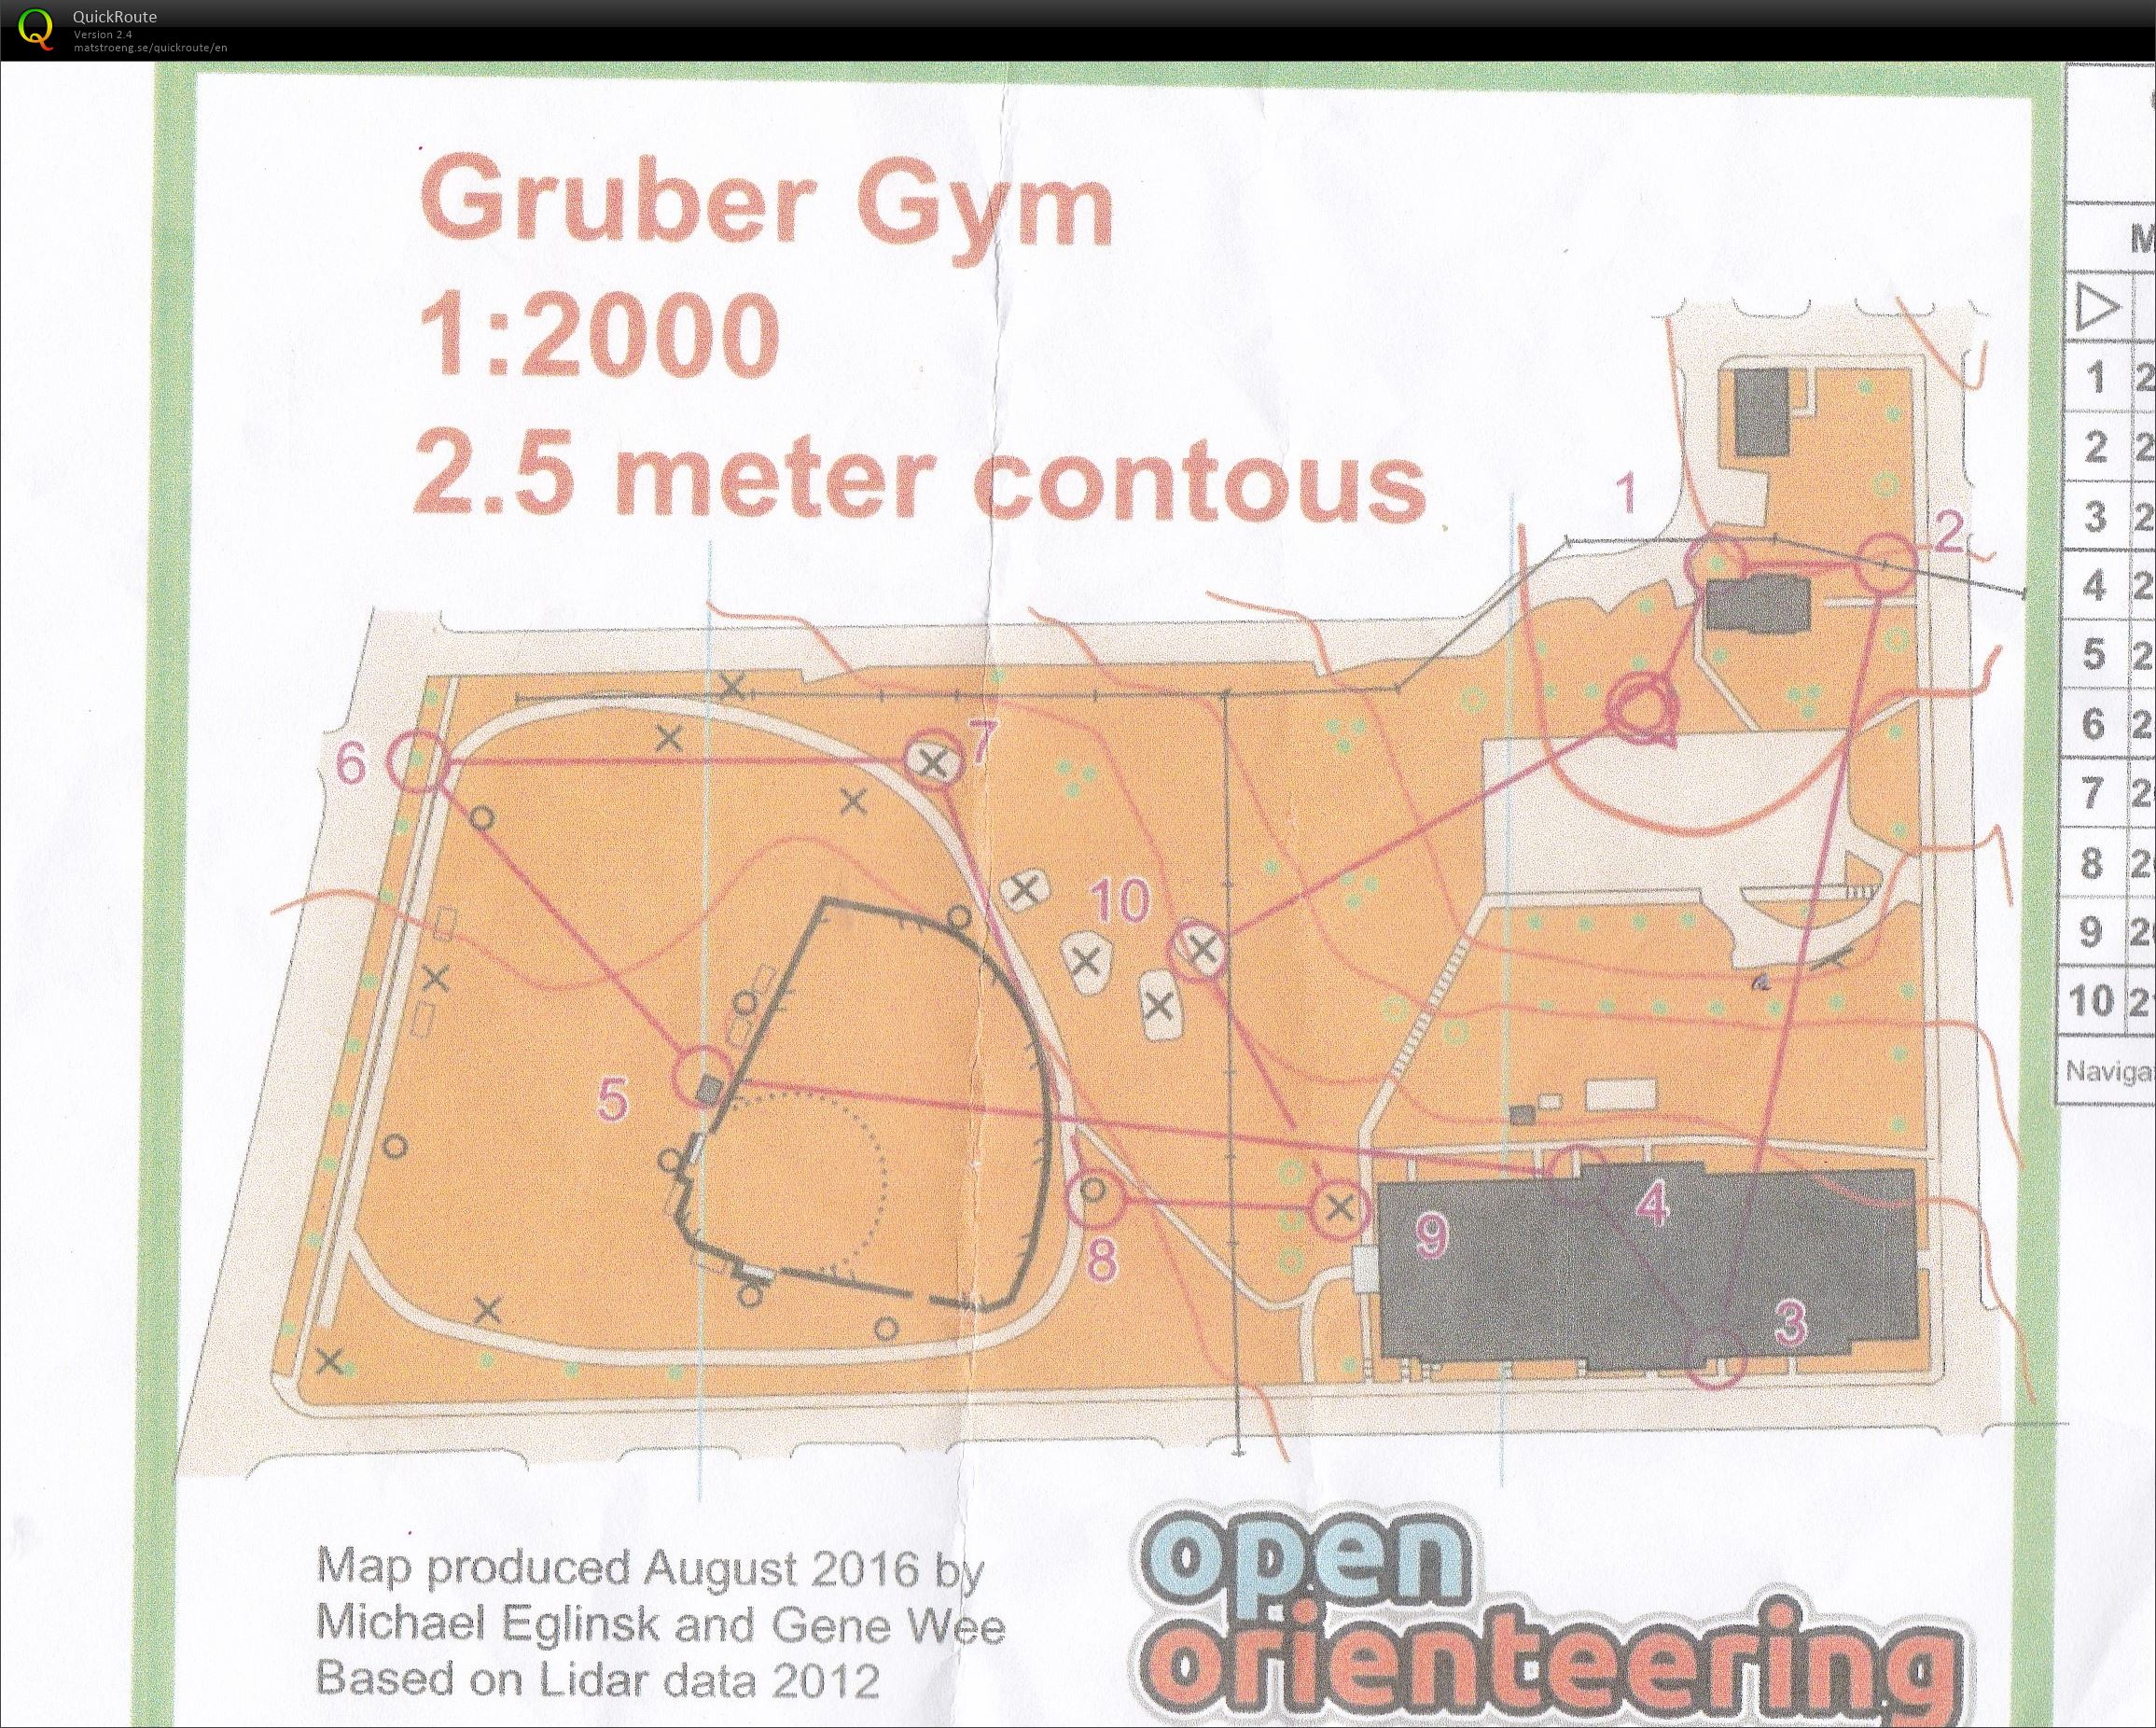 Gruber Gym Mini course (2017-10-28)